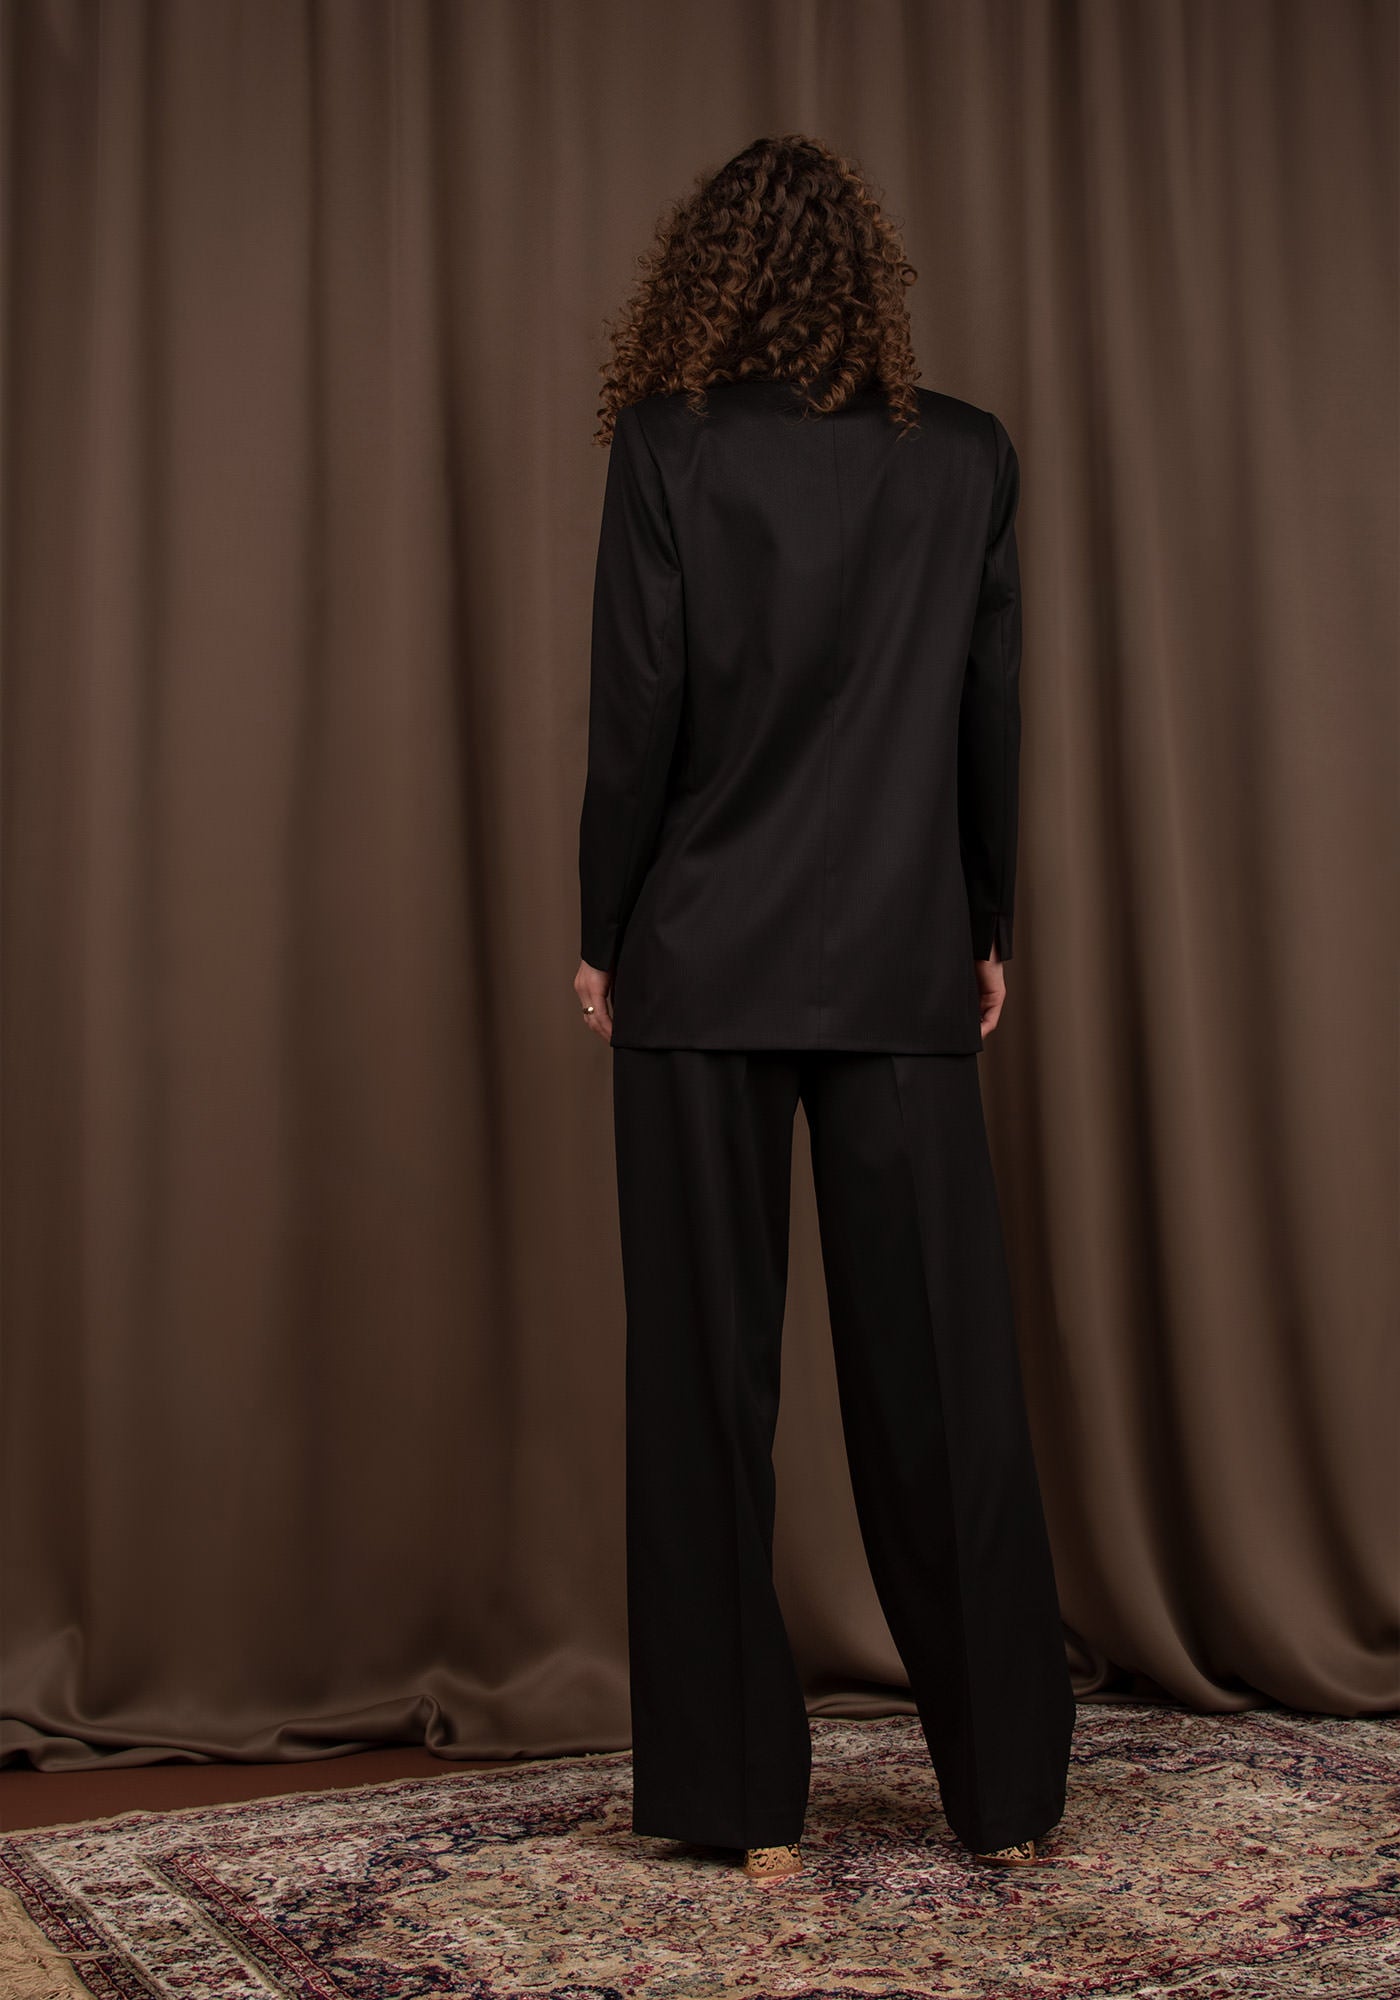 Women's Three Piece Power suit in Bengal Stripe black